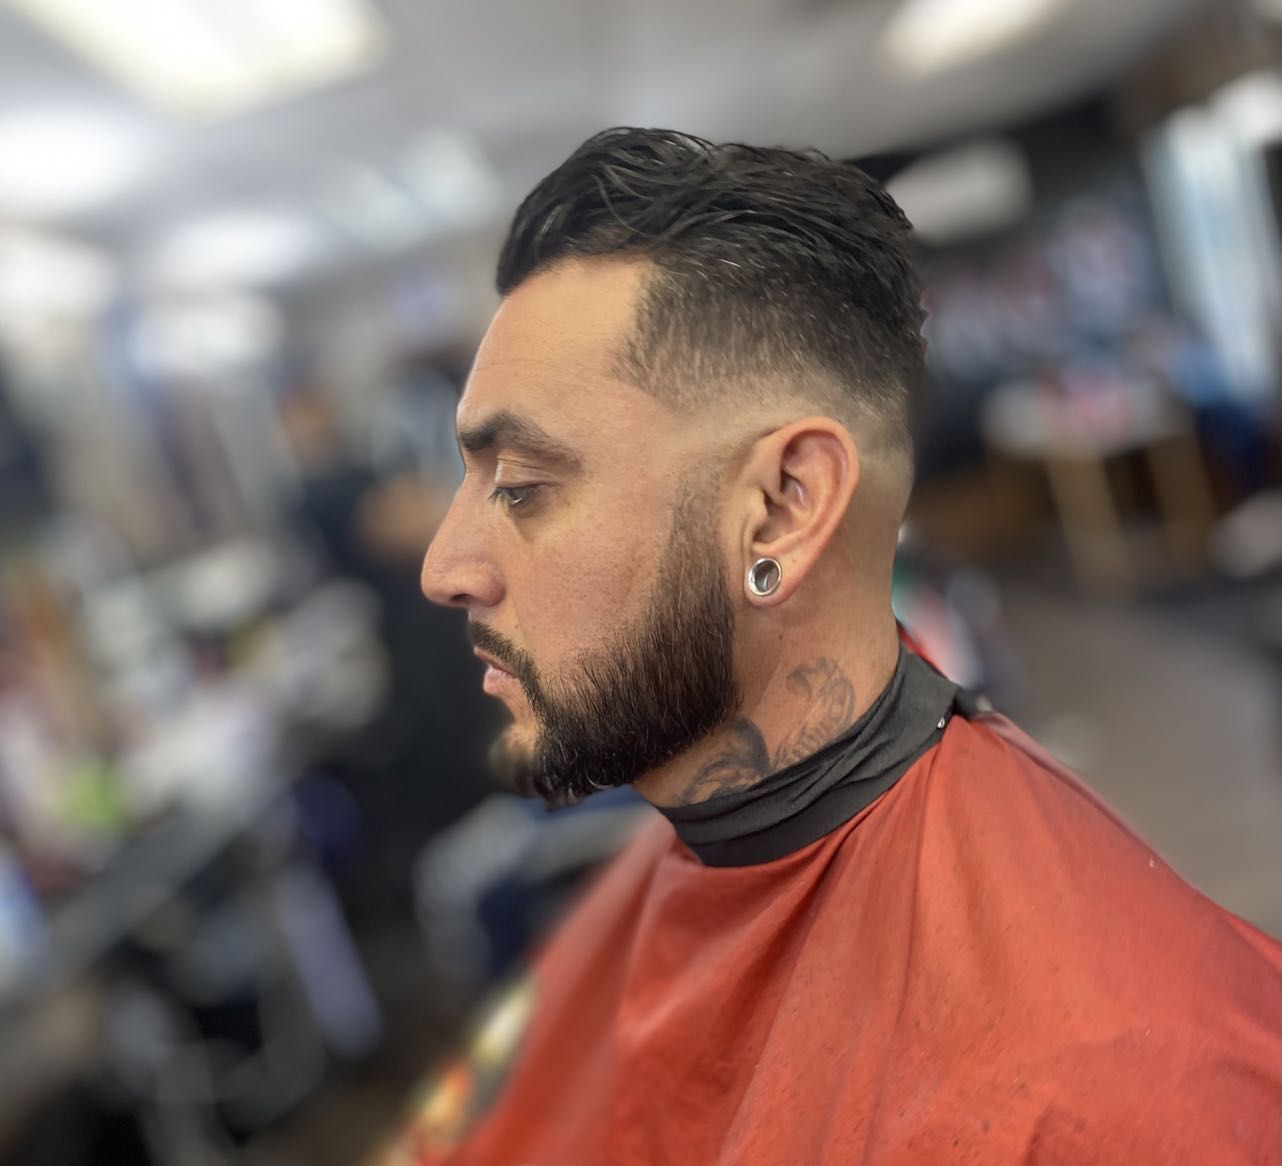 Men’s haircut and beard trim portfolio